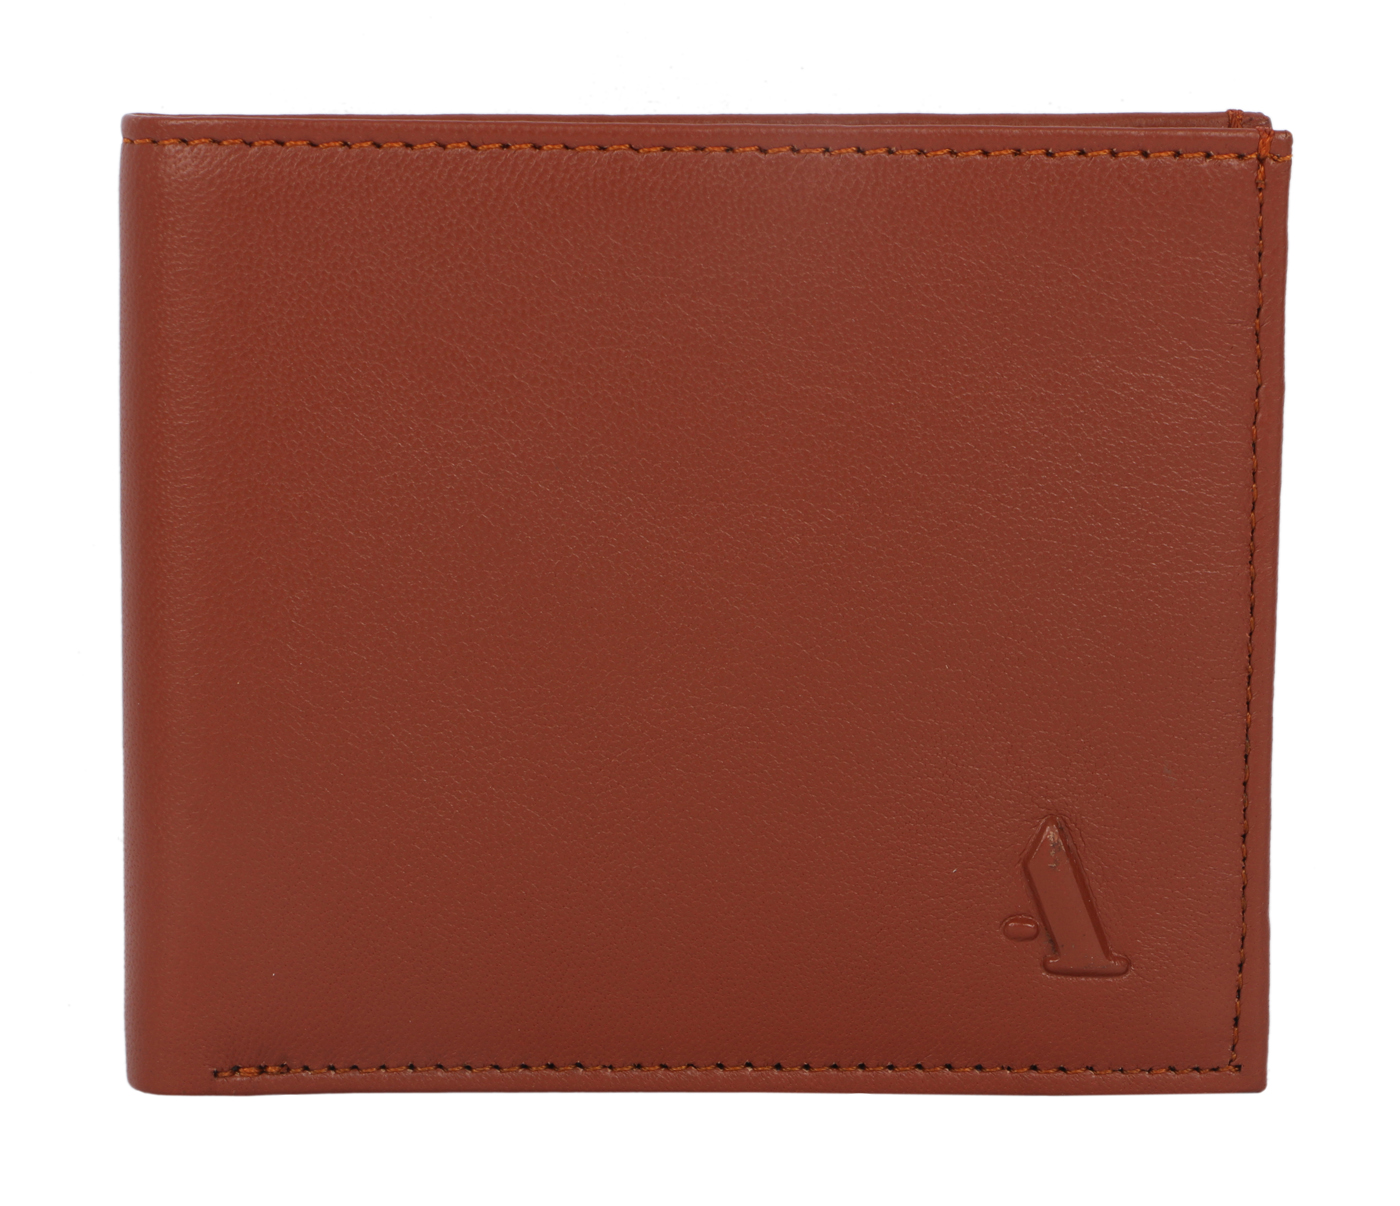 W41-Daniel-Men's bifold wallet with card pockets in Genuine Leather - Tan